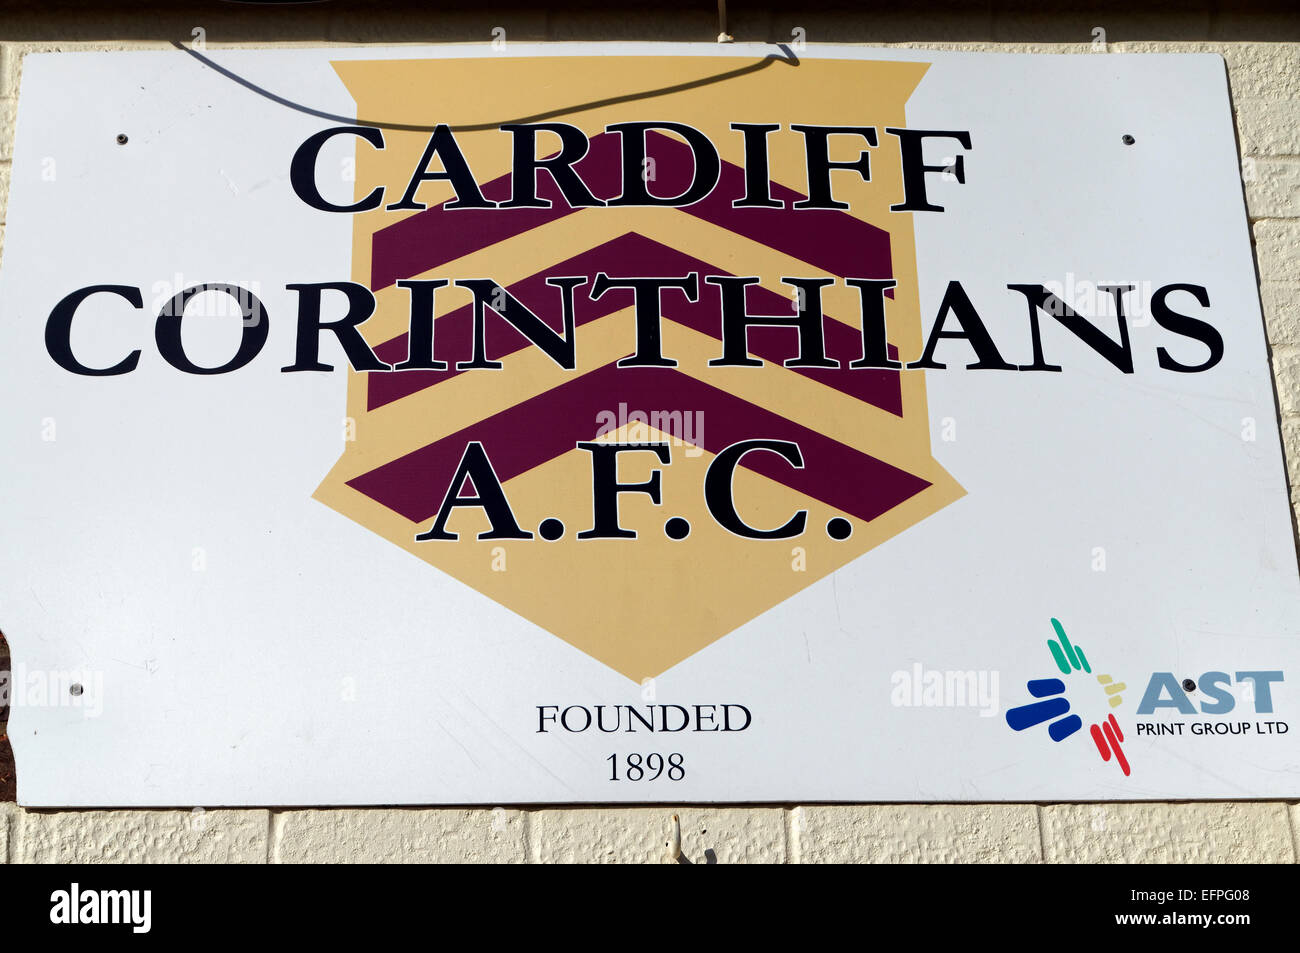 Cardiff Corinthians AFC football club sign, Radyr, Cardiff, Wales, UK. Stock Photo